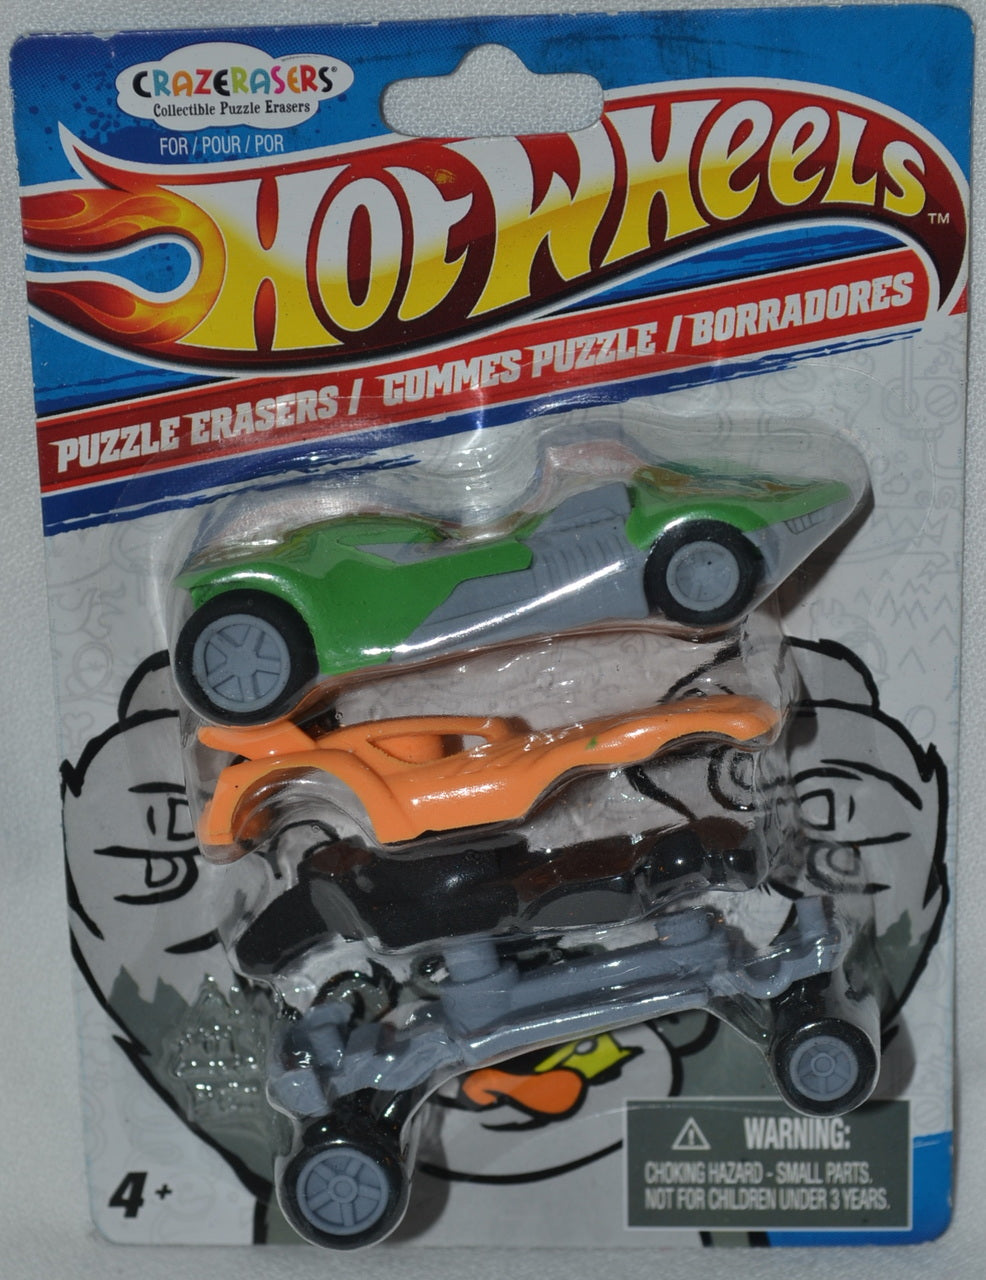 Hot Wheels 2010 Crazerasers Collectible Puzzle Erasers - Green Orange